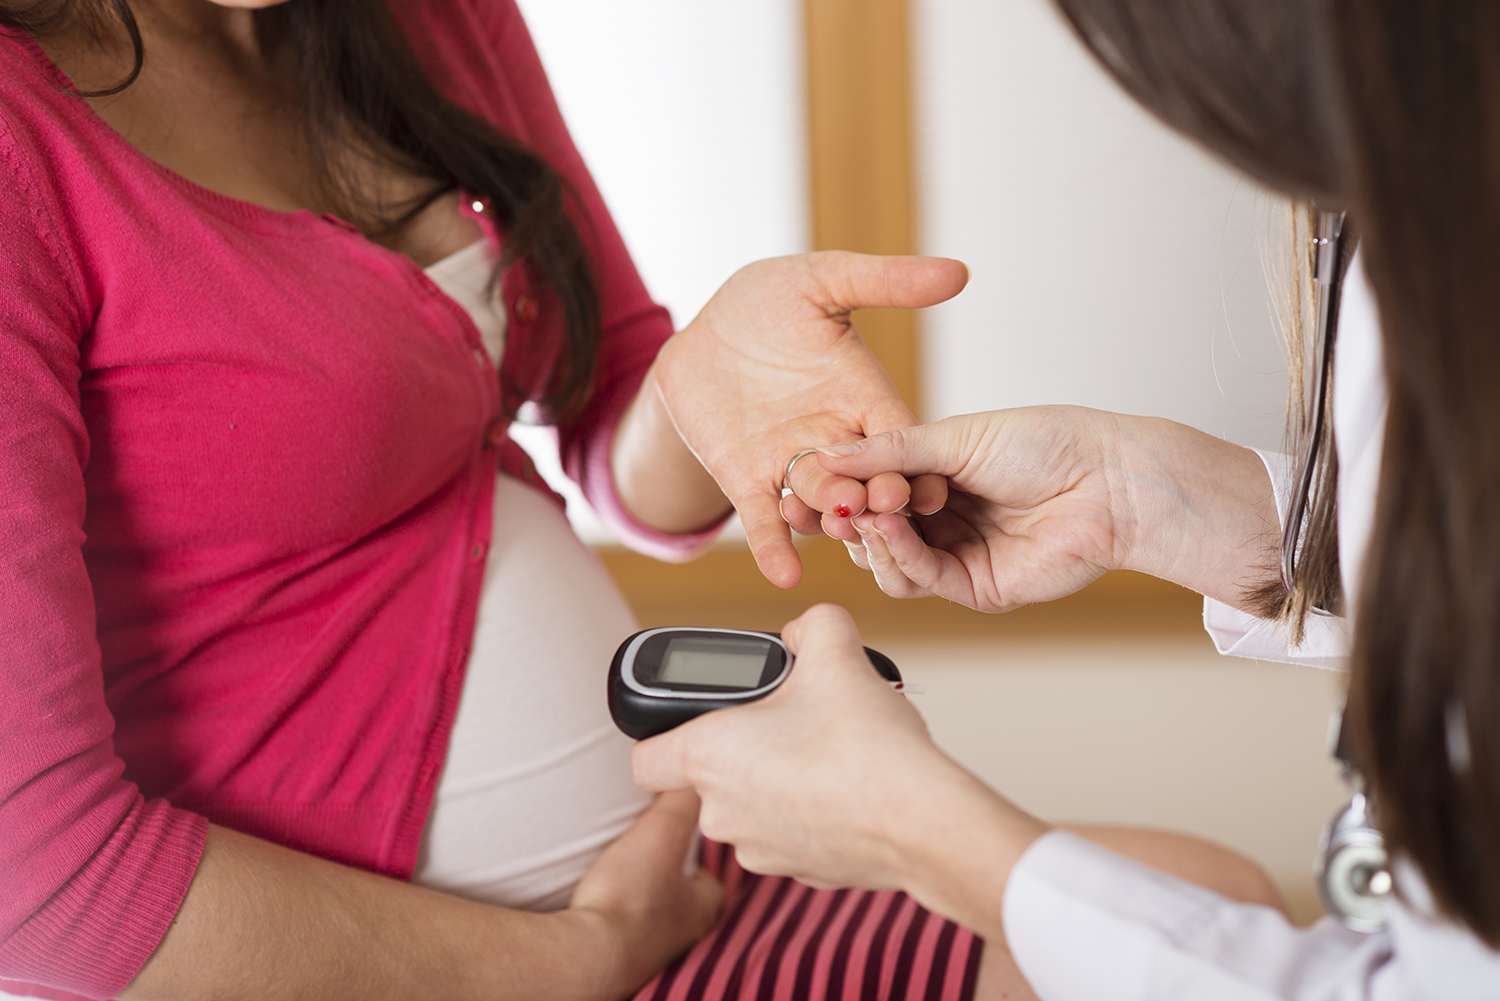 Pregnant woman receiving a diabetes test